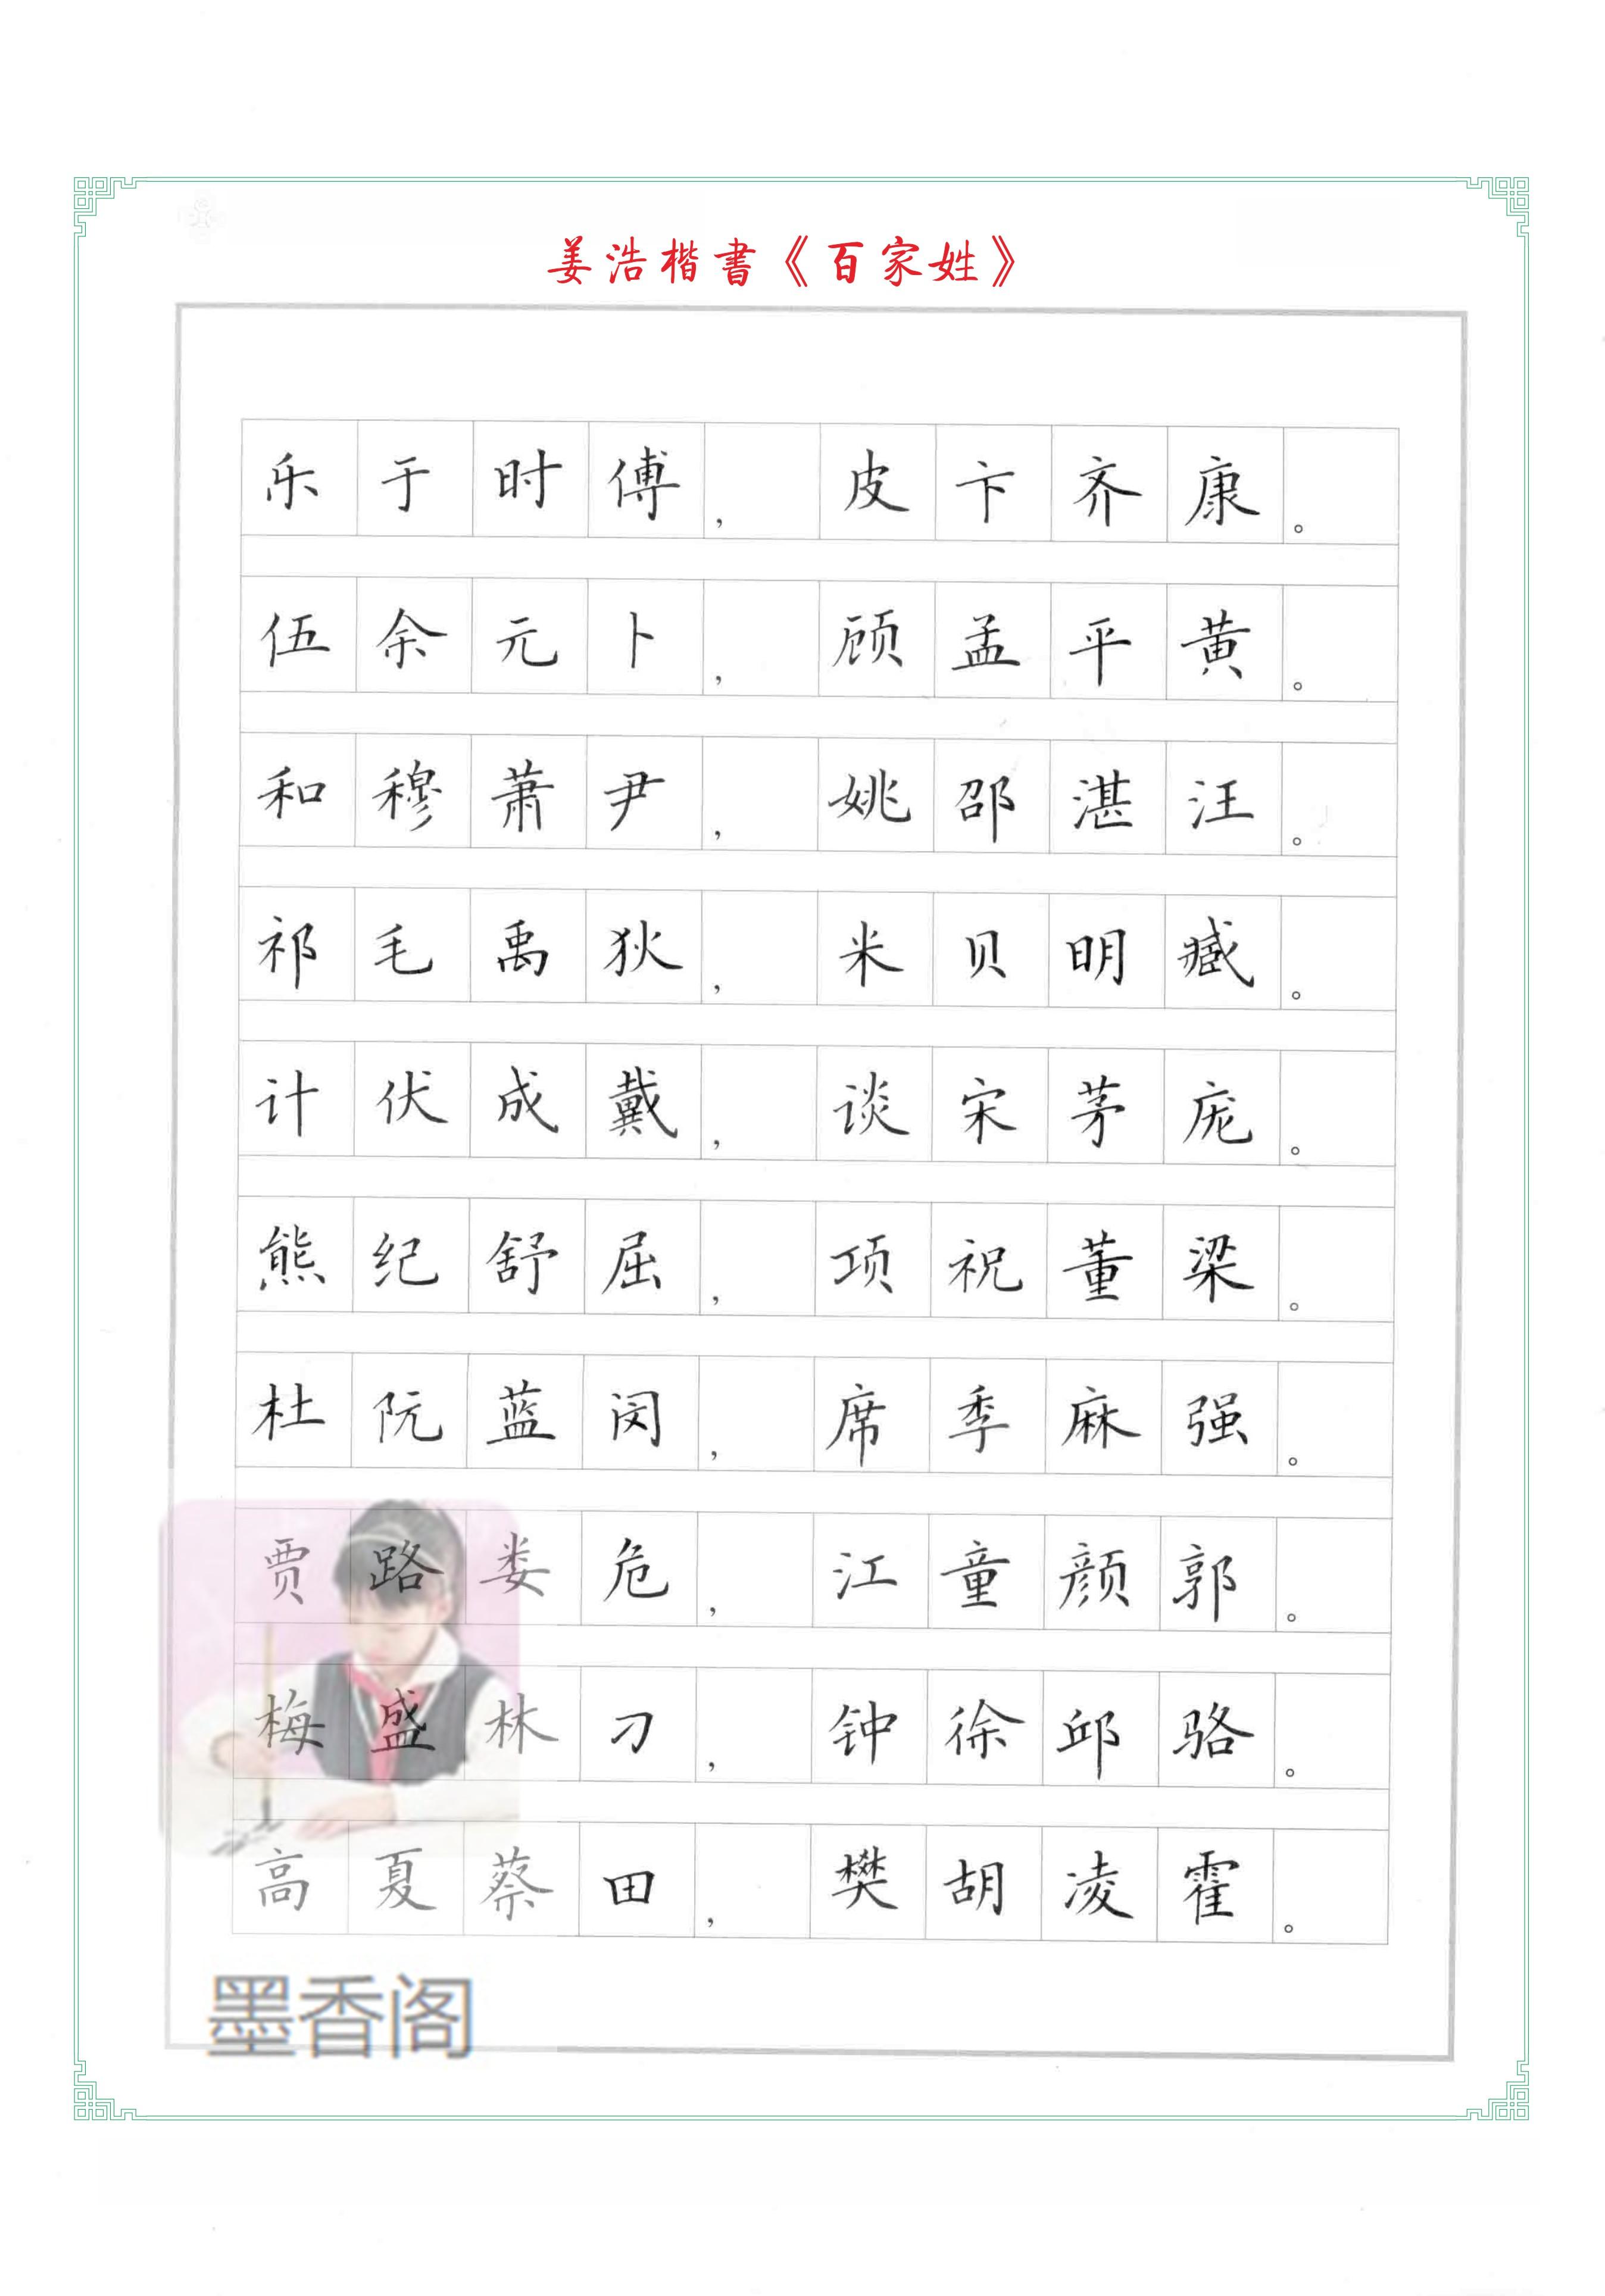 Mr. Jiang Hao's regular script -- "Hundred Surnames" (simplified + traditional)